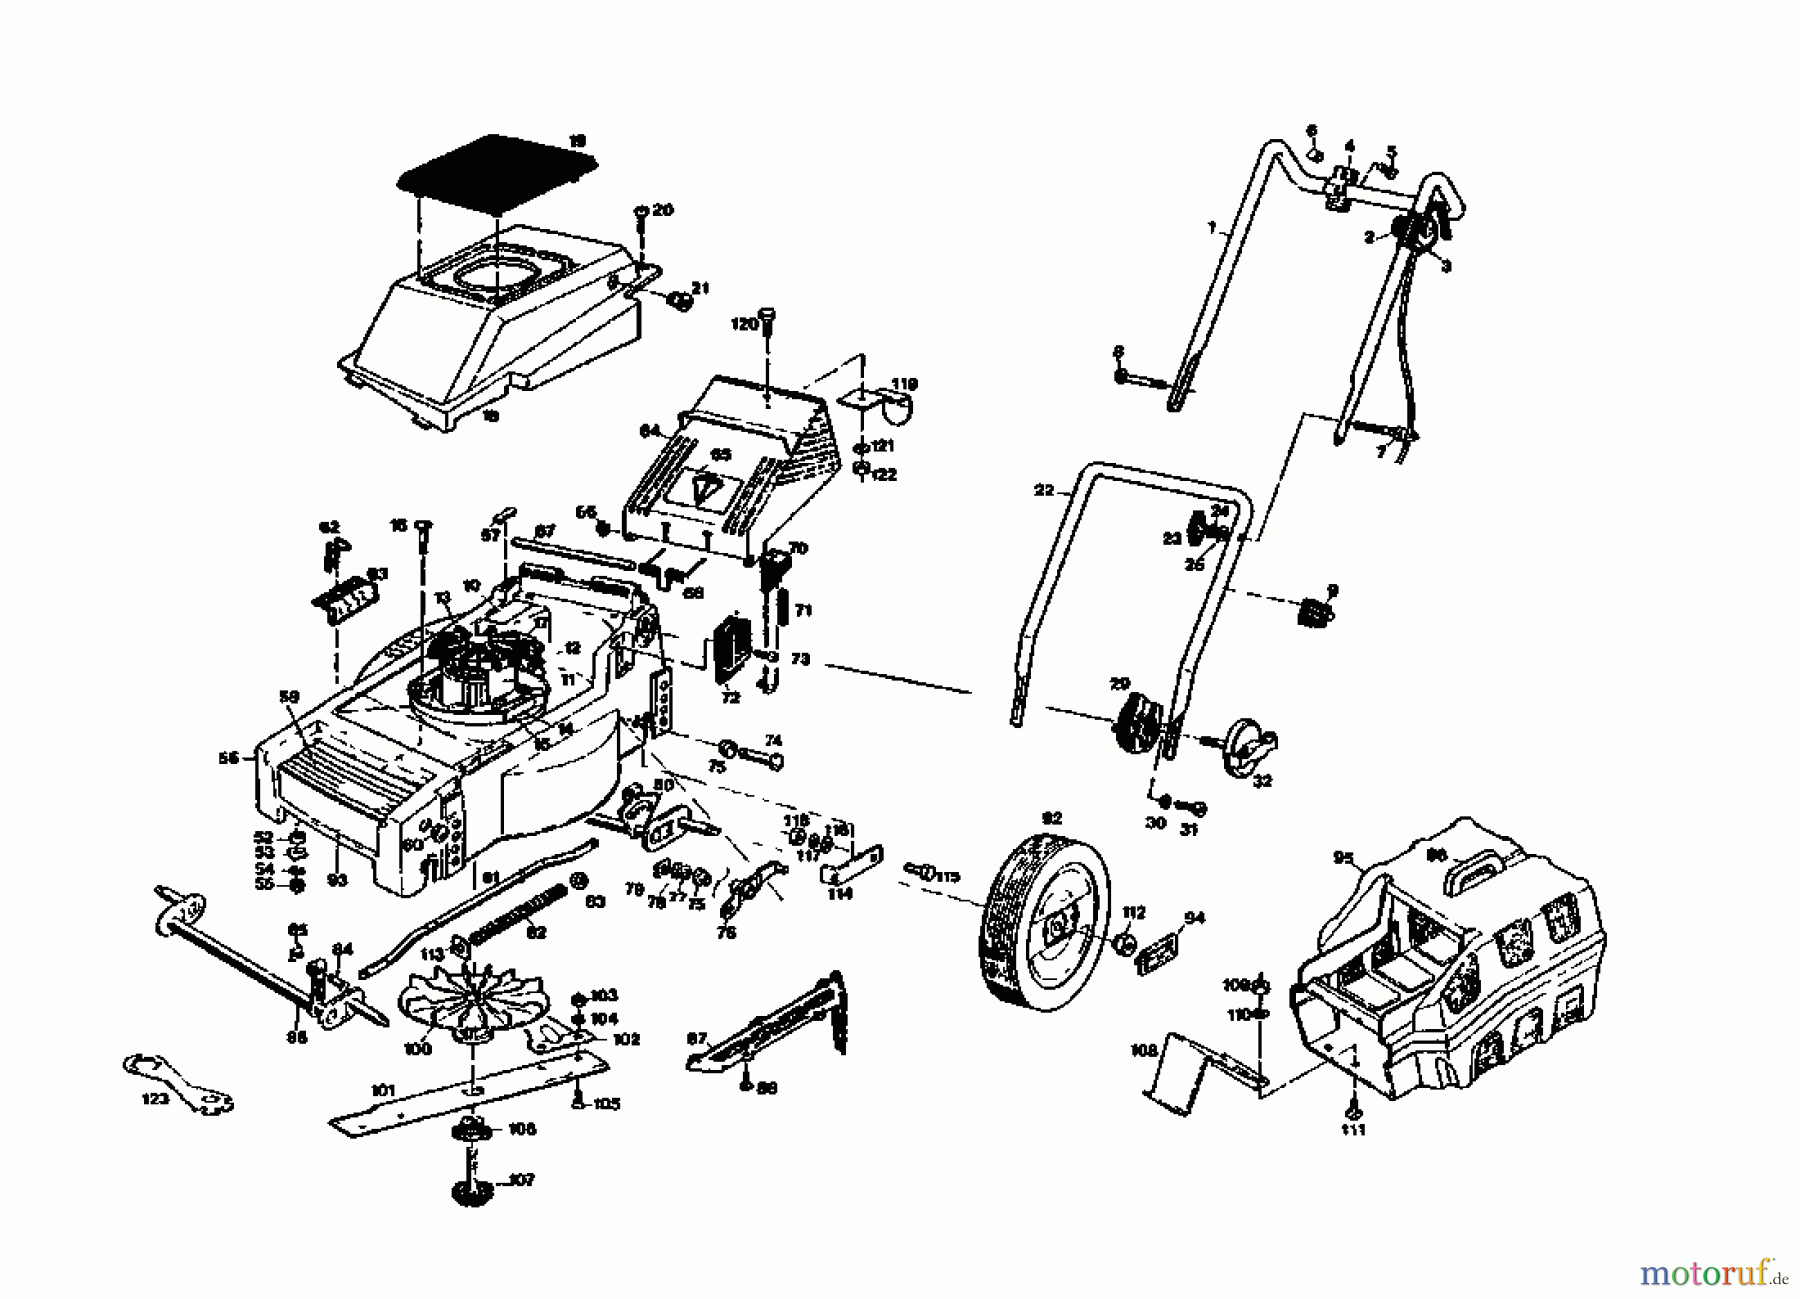  Gutbrod Electric mower HE 40 L 02895.01  (1987) Basic machine